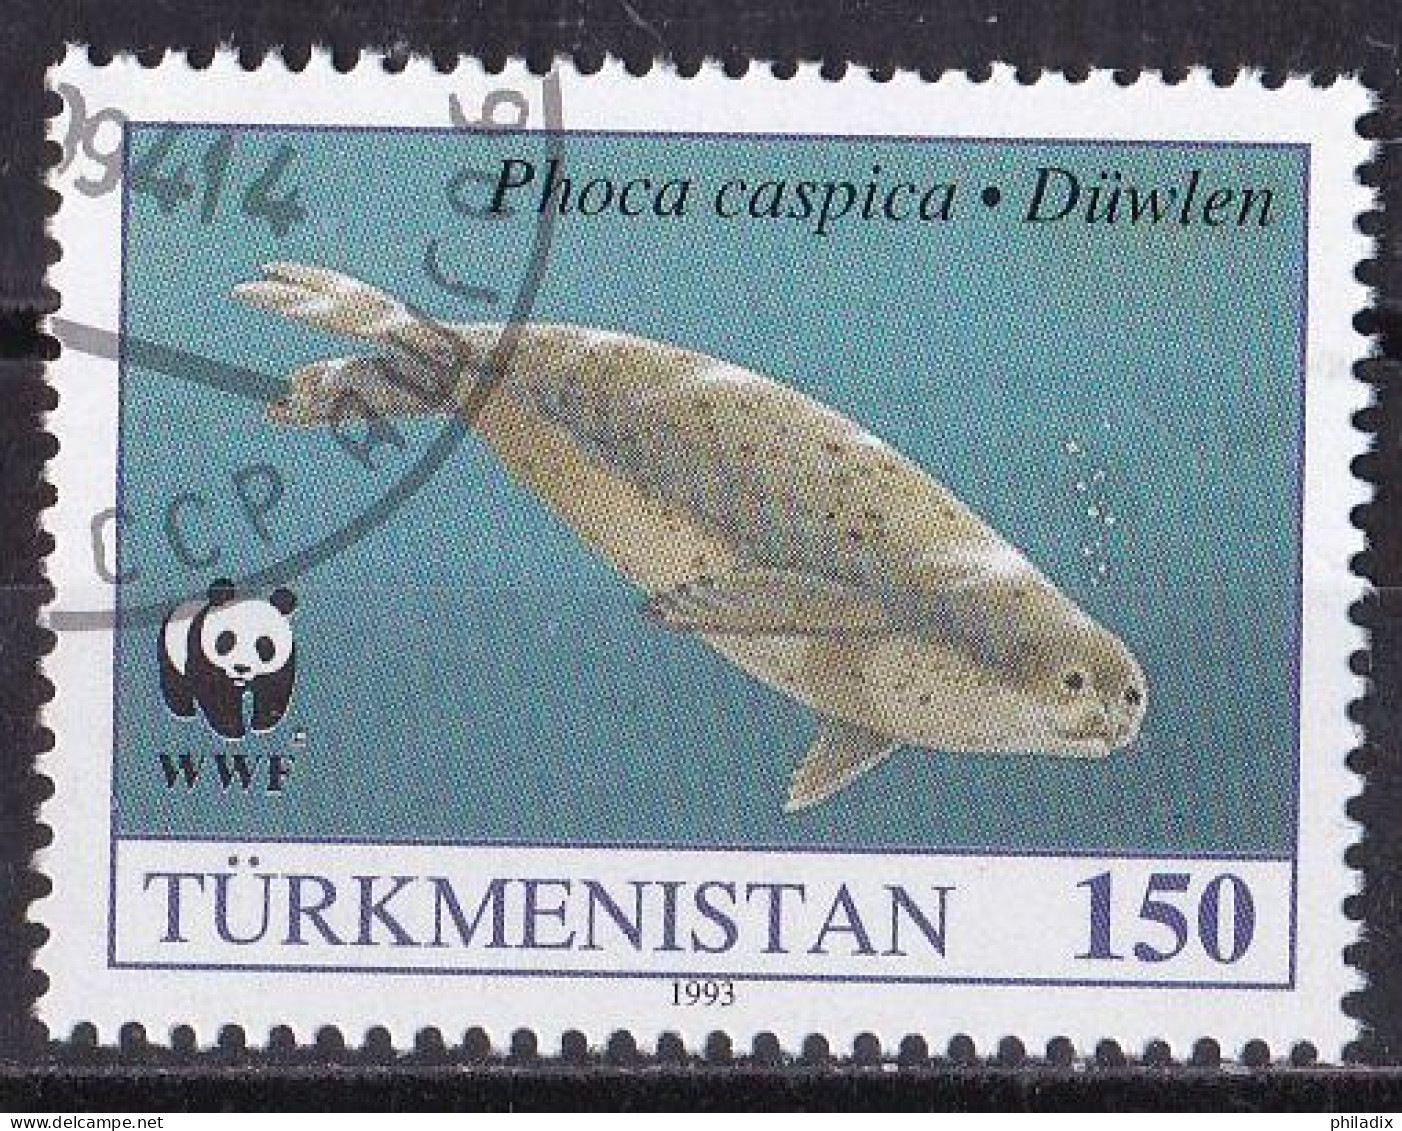 Turkmenistan Marke Von 1993 O/used (A4-10) - Turkmenistan